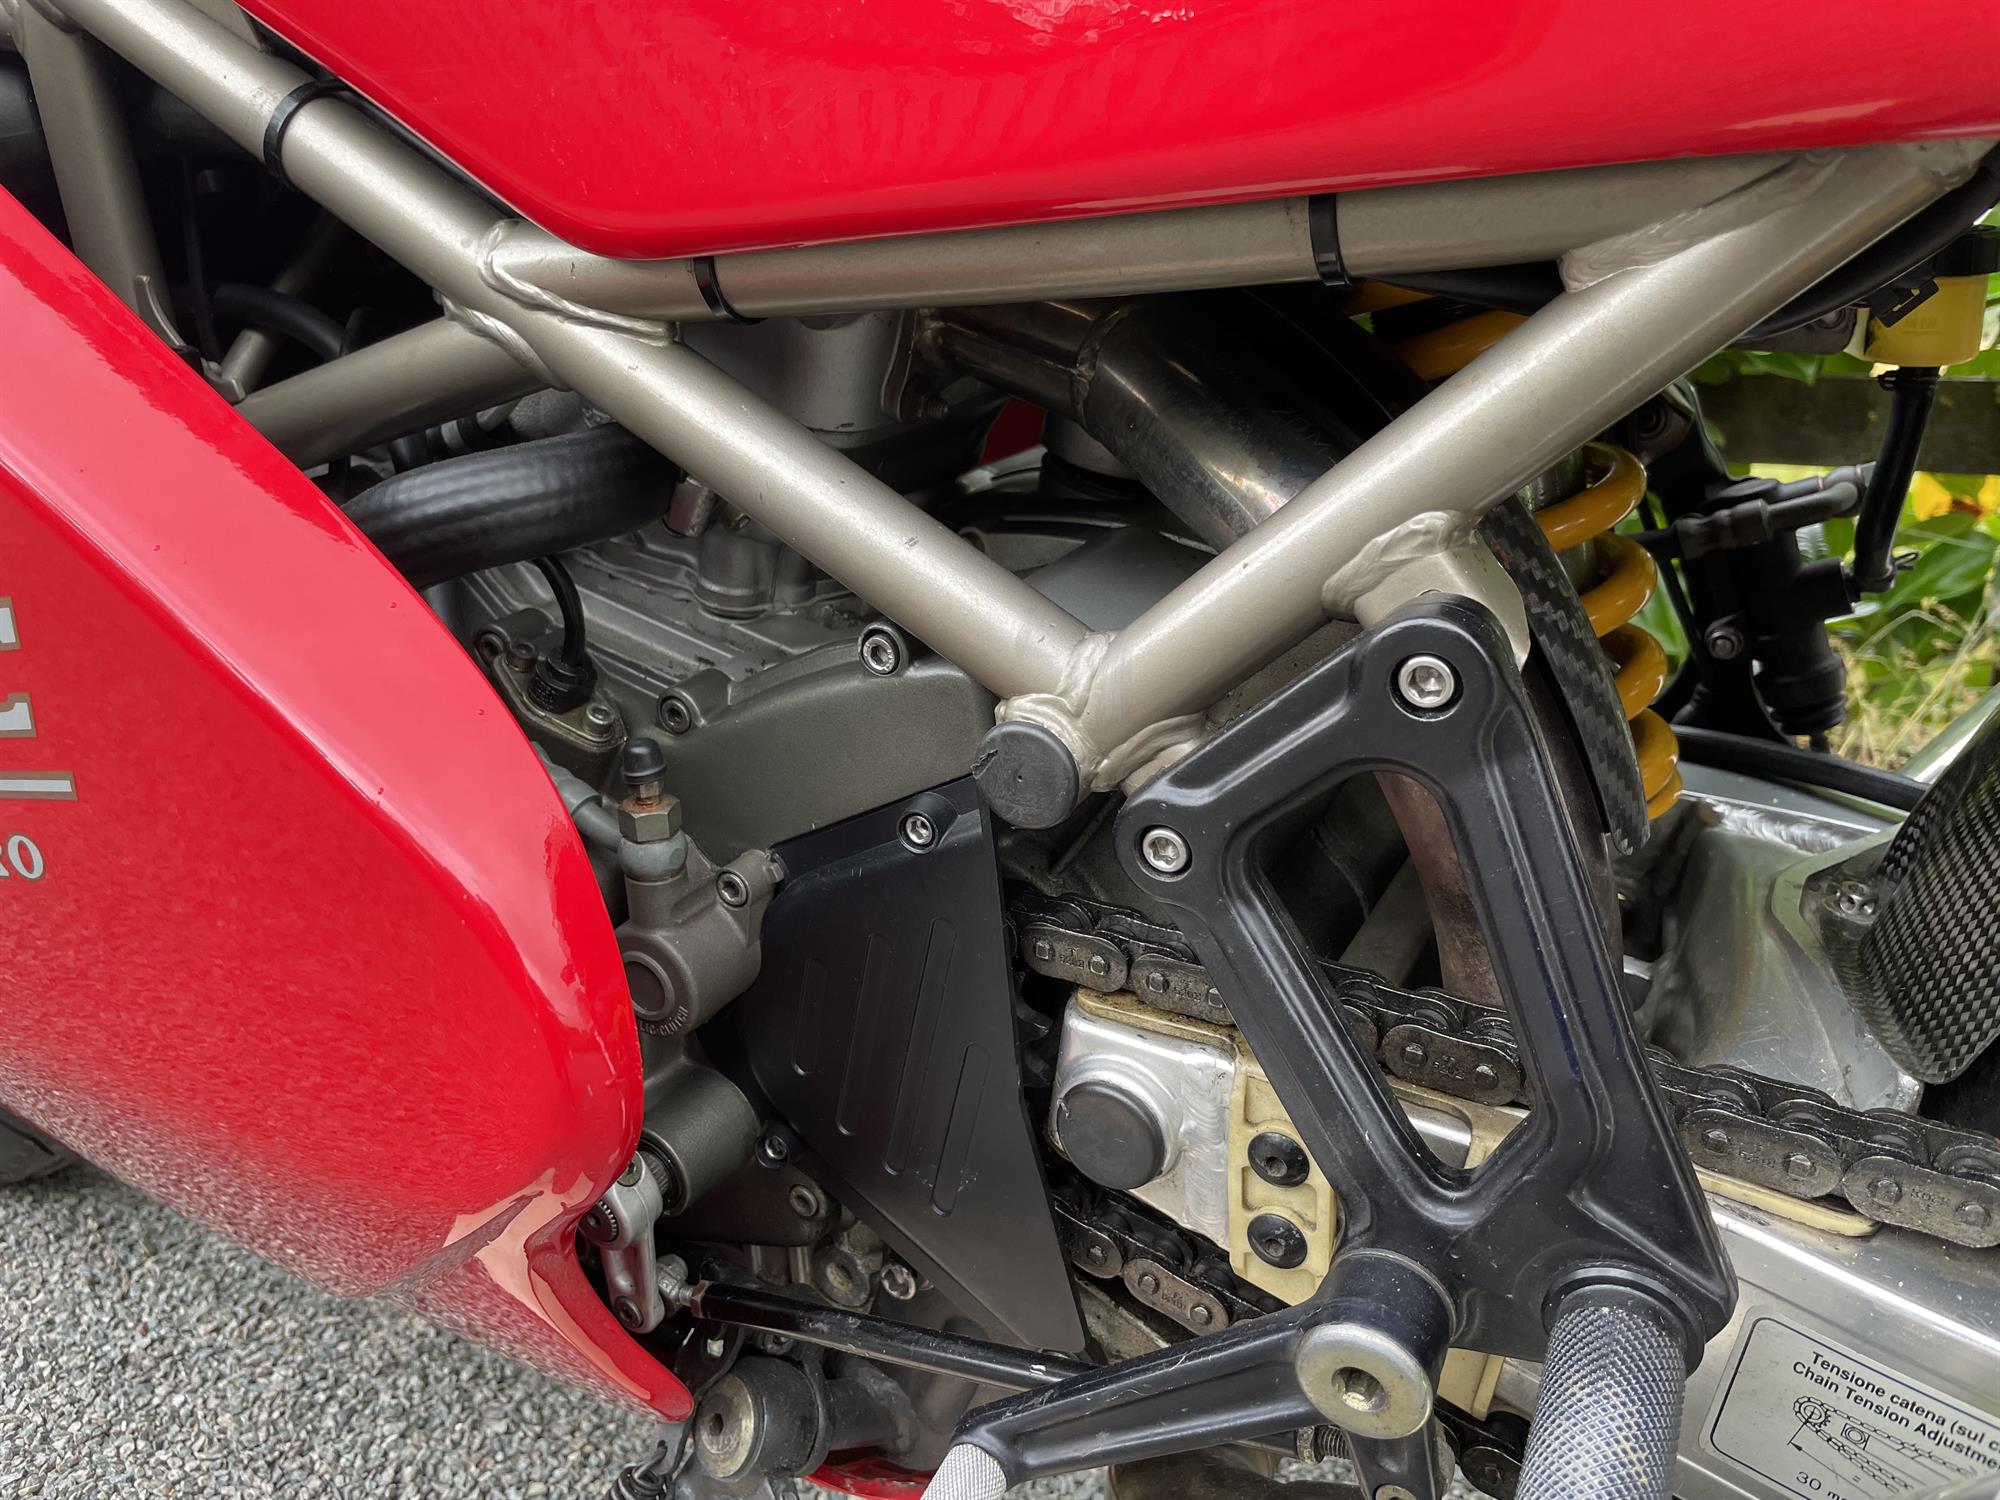 1993 Ducati 888 SP5 888cc - Image 7 of 10